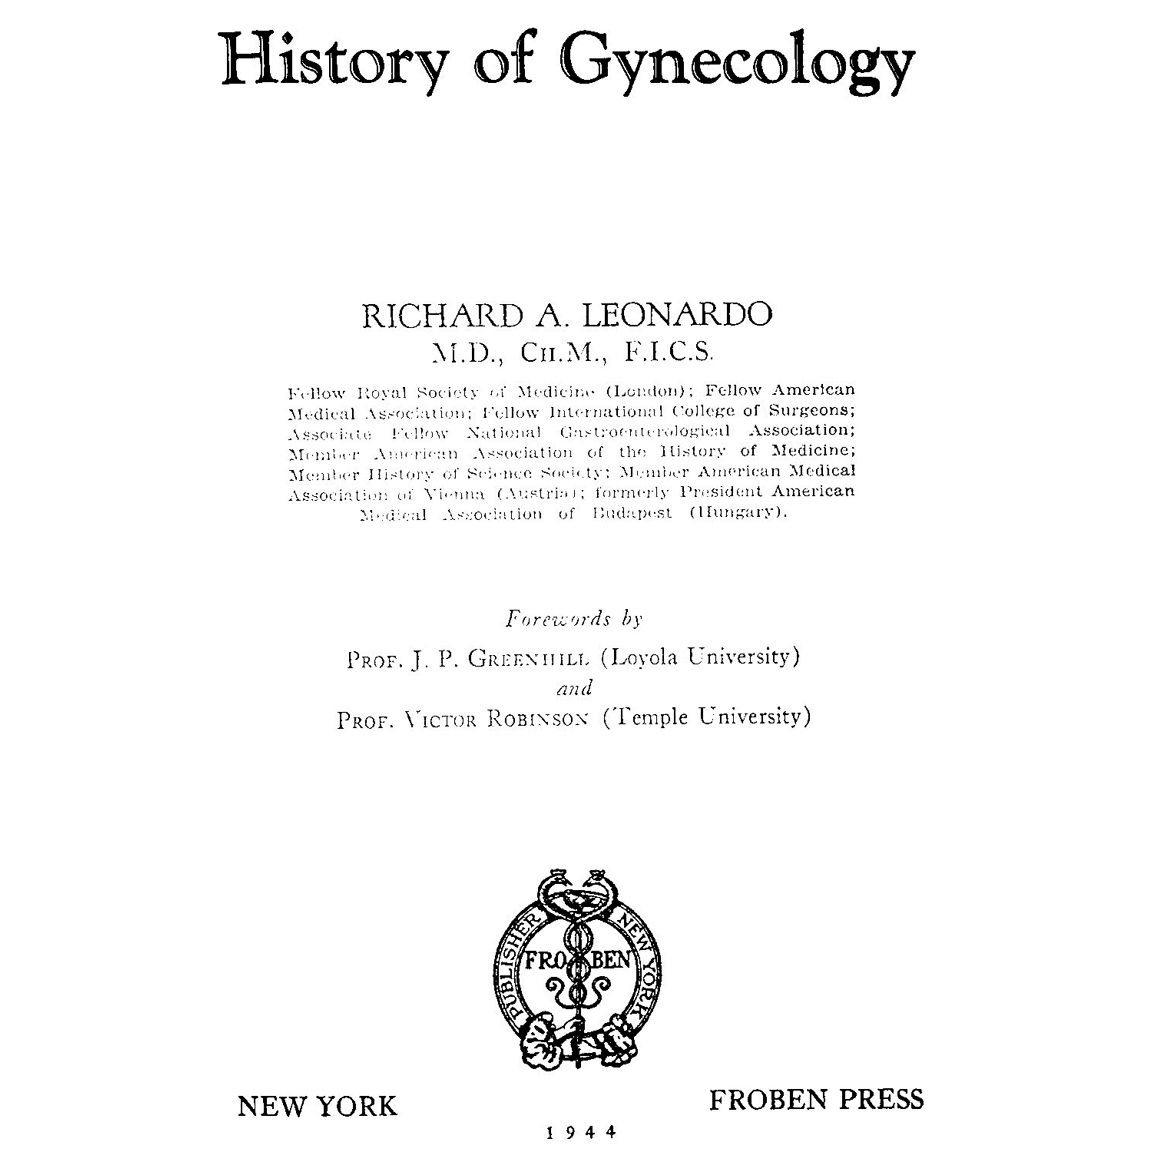 1944-LEONARDO History of Gynecology title page